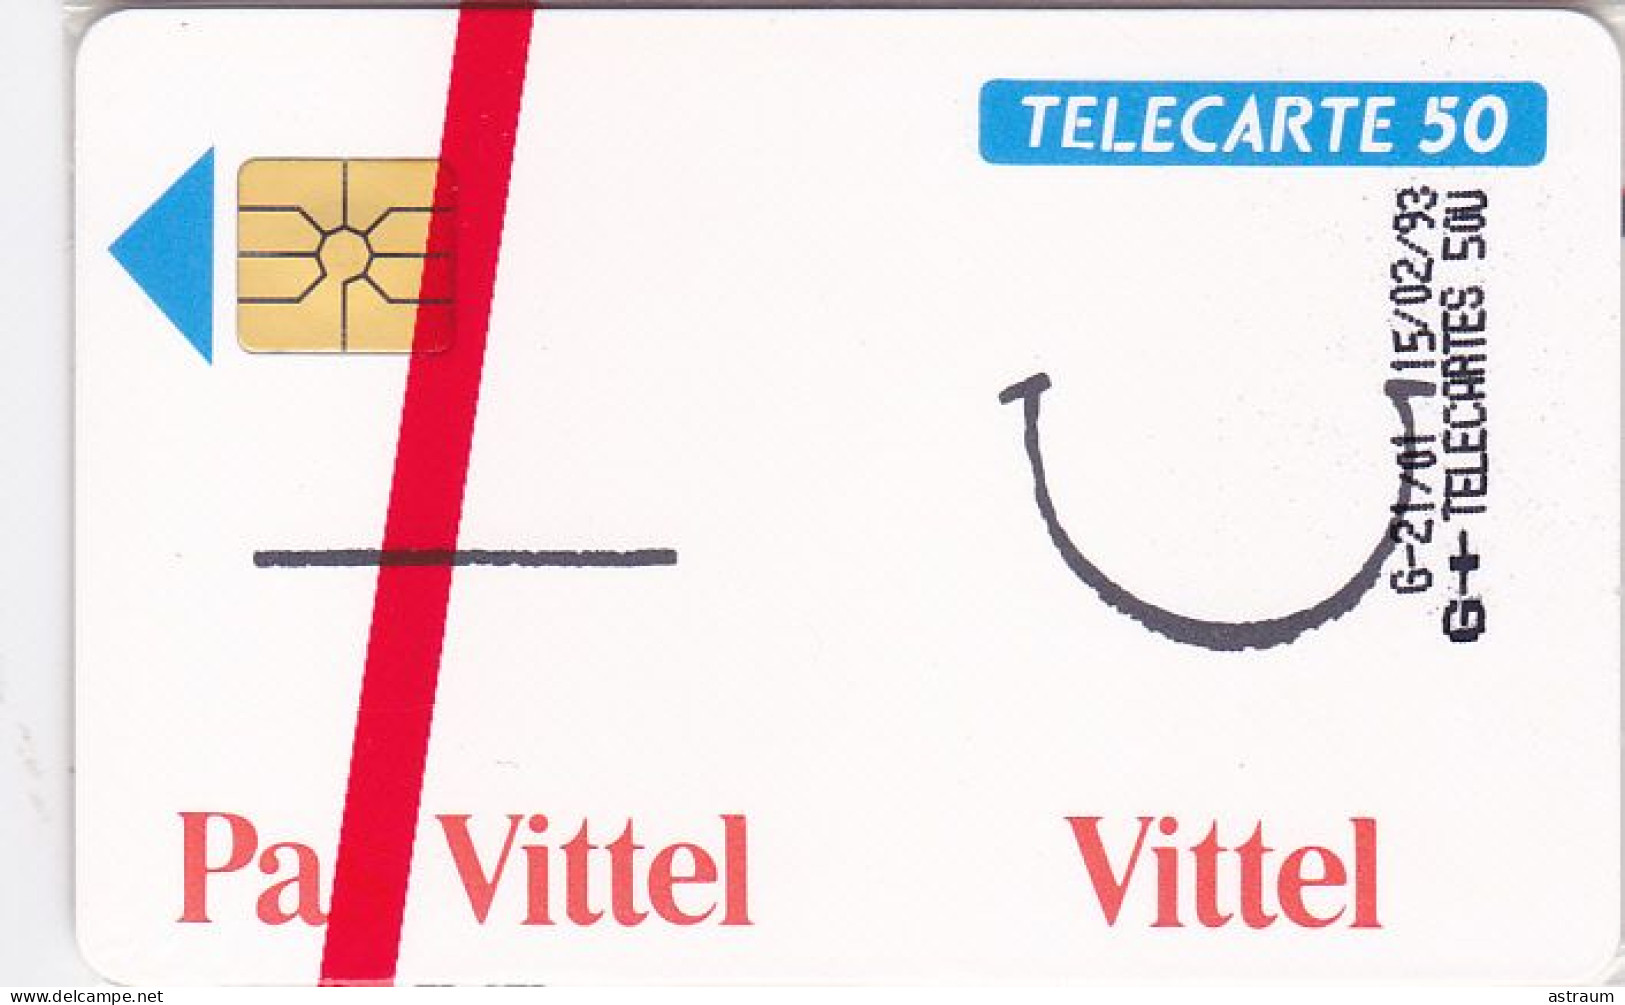 Telecarte Publique F333 NSB - Vittel - So4 - 50 U - 1993 - - 1993